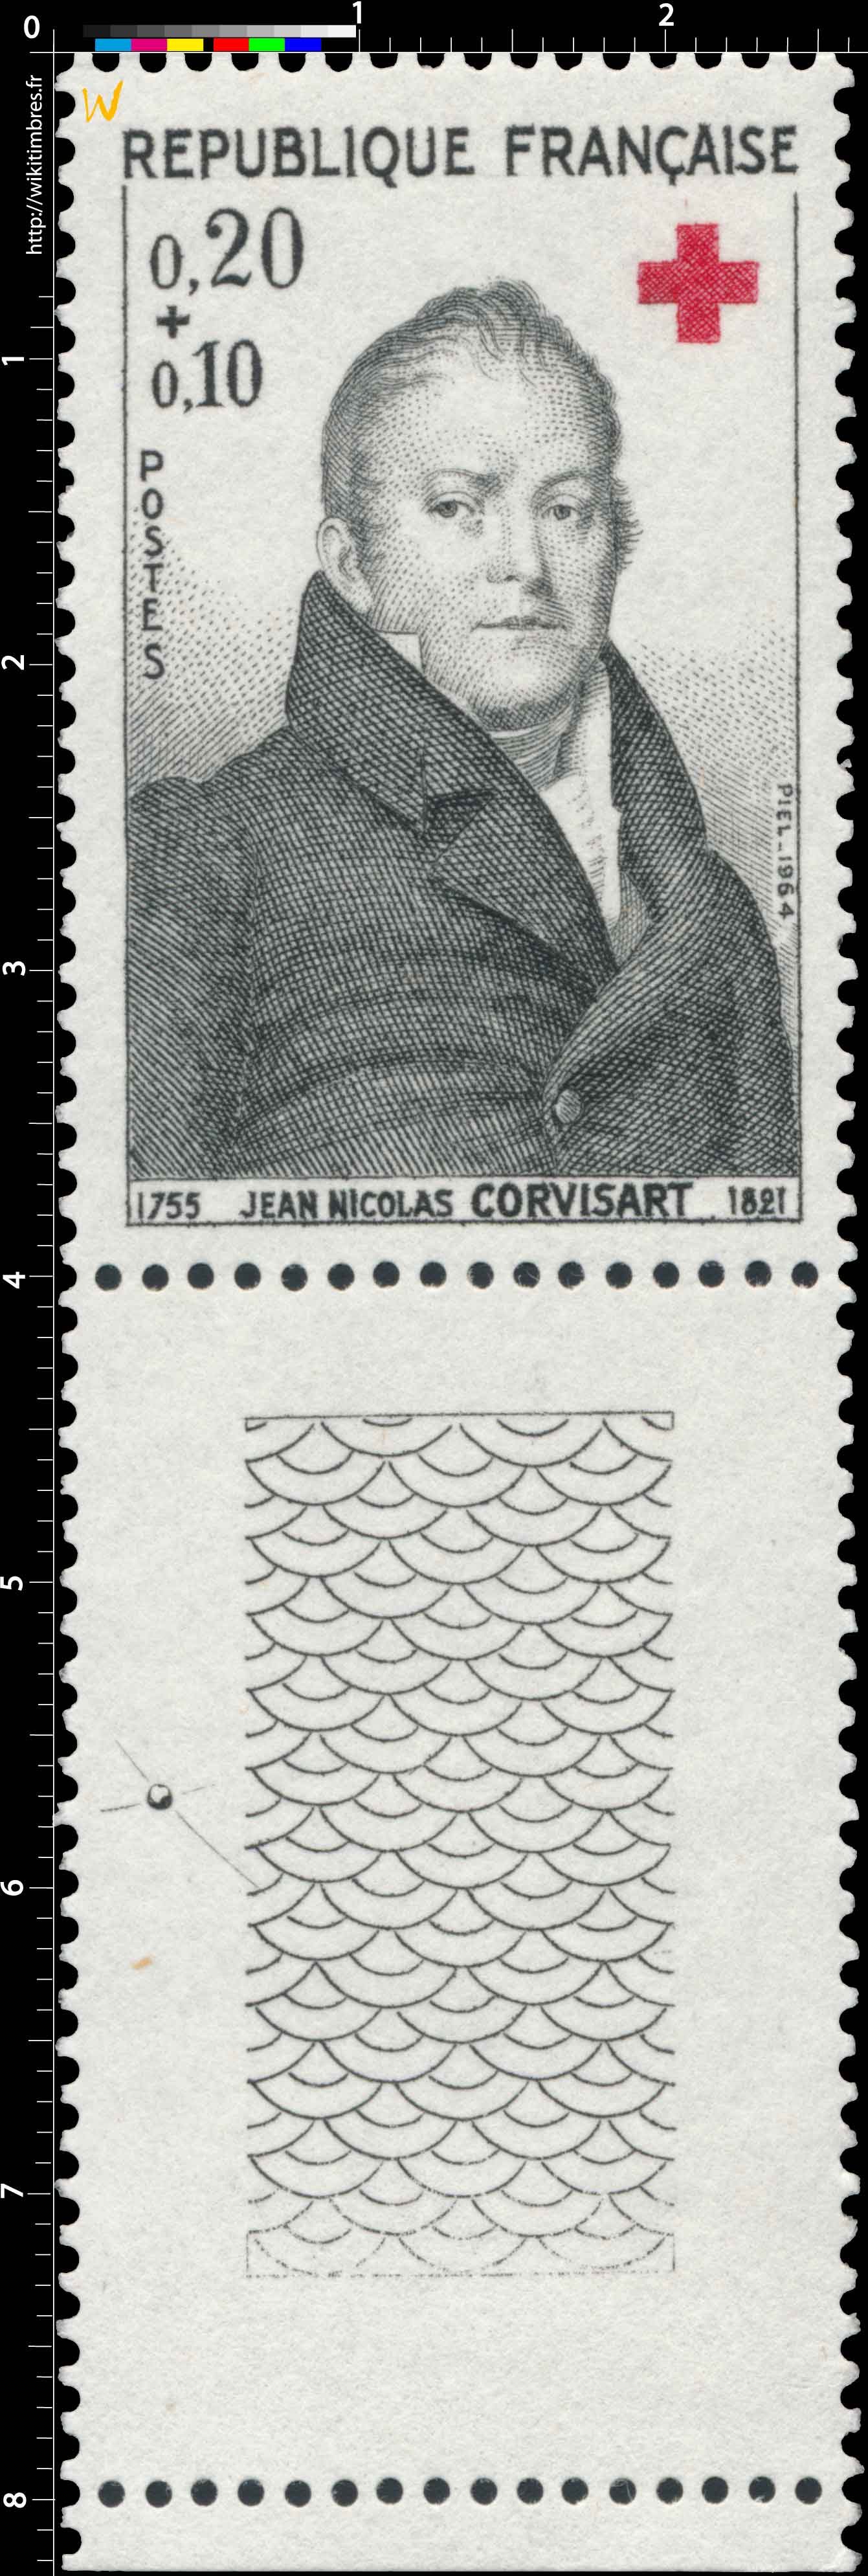 1964 JEAN-NICOLAS CORVISART 1755-1821